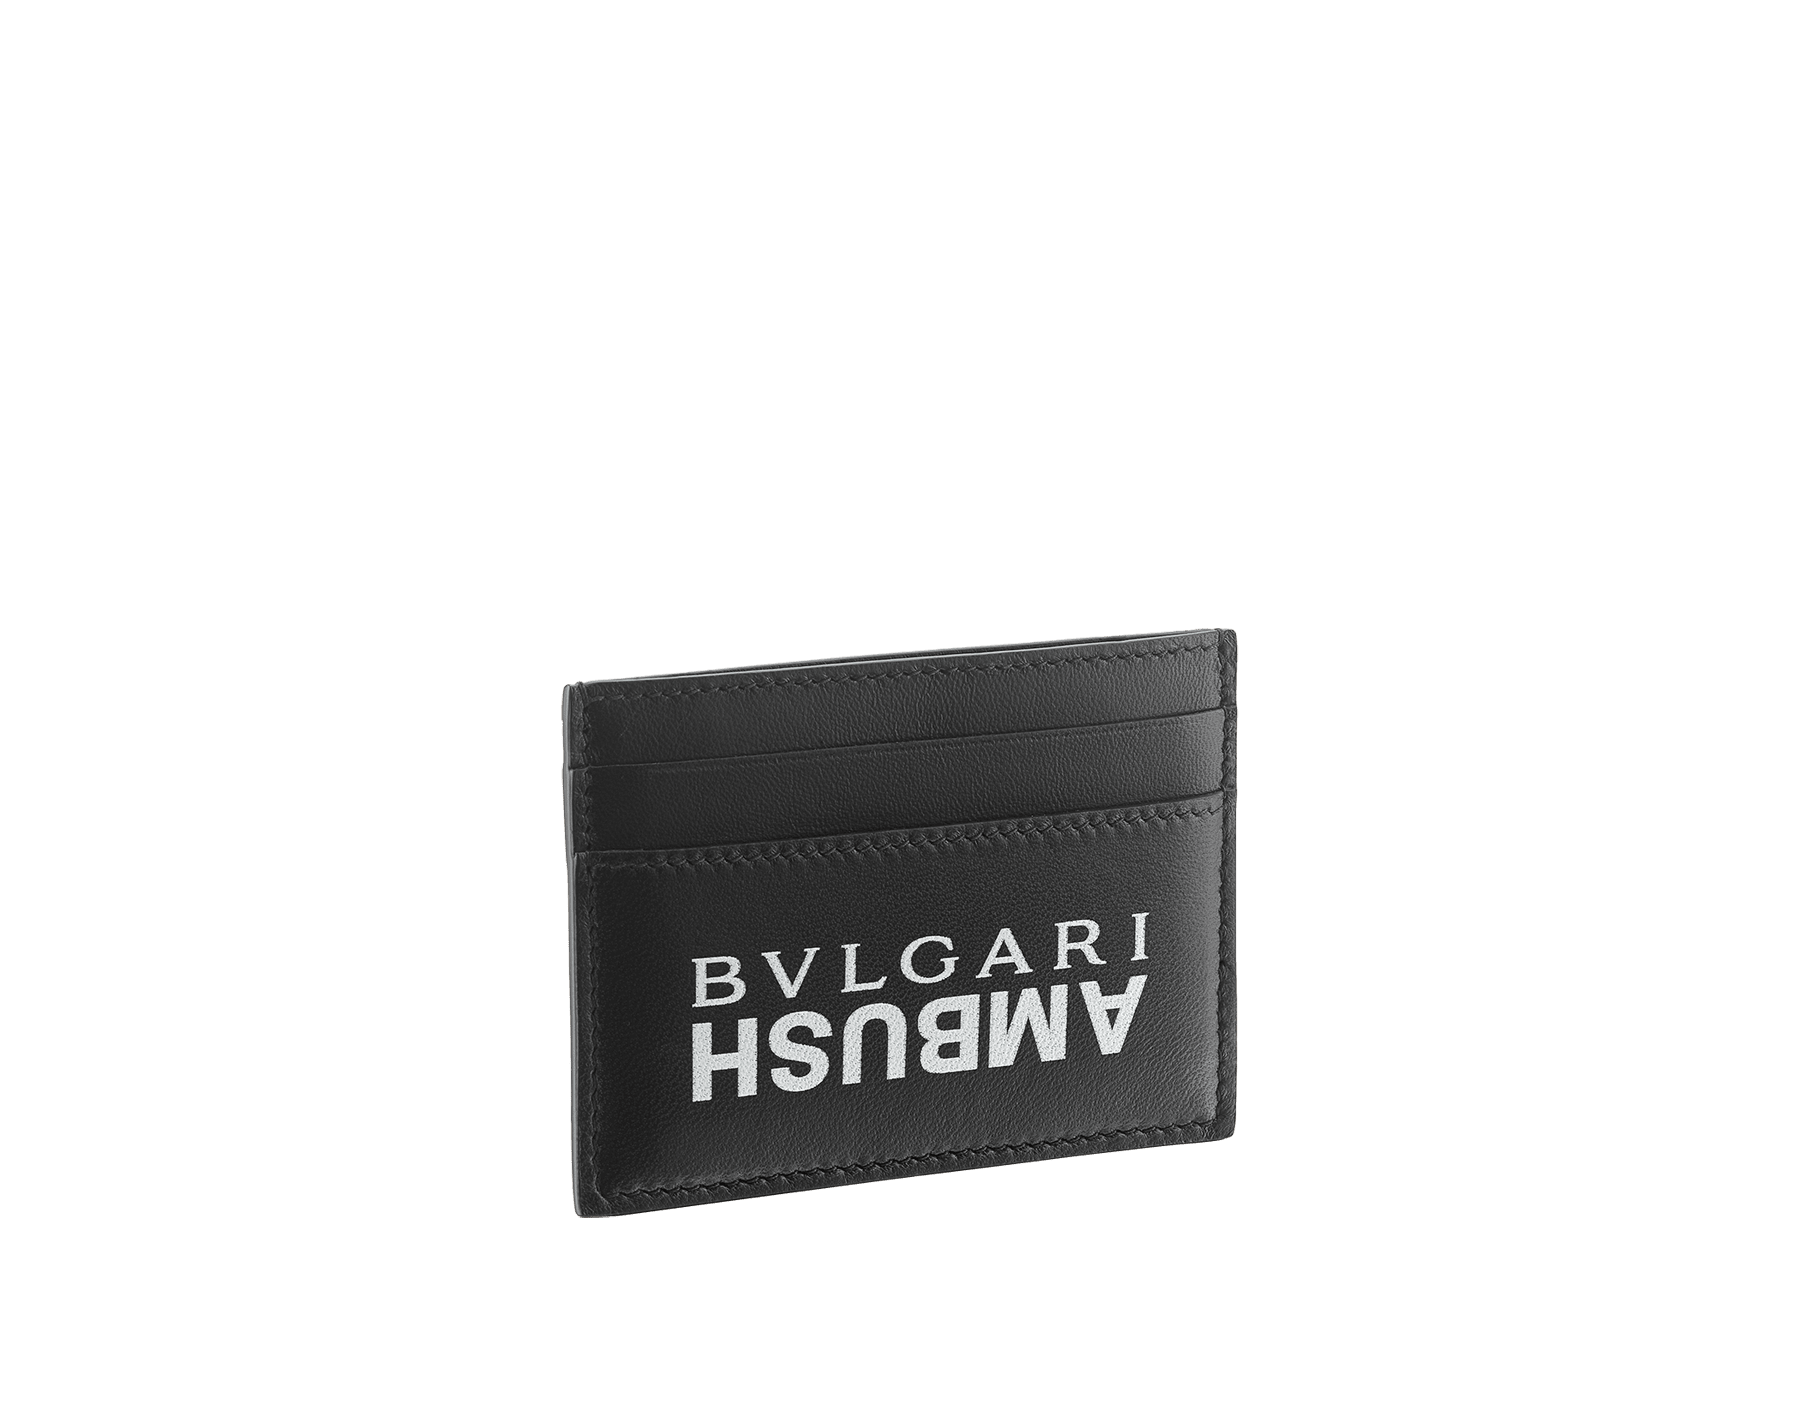 bvlgari limited edition